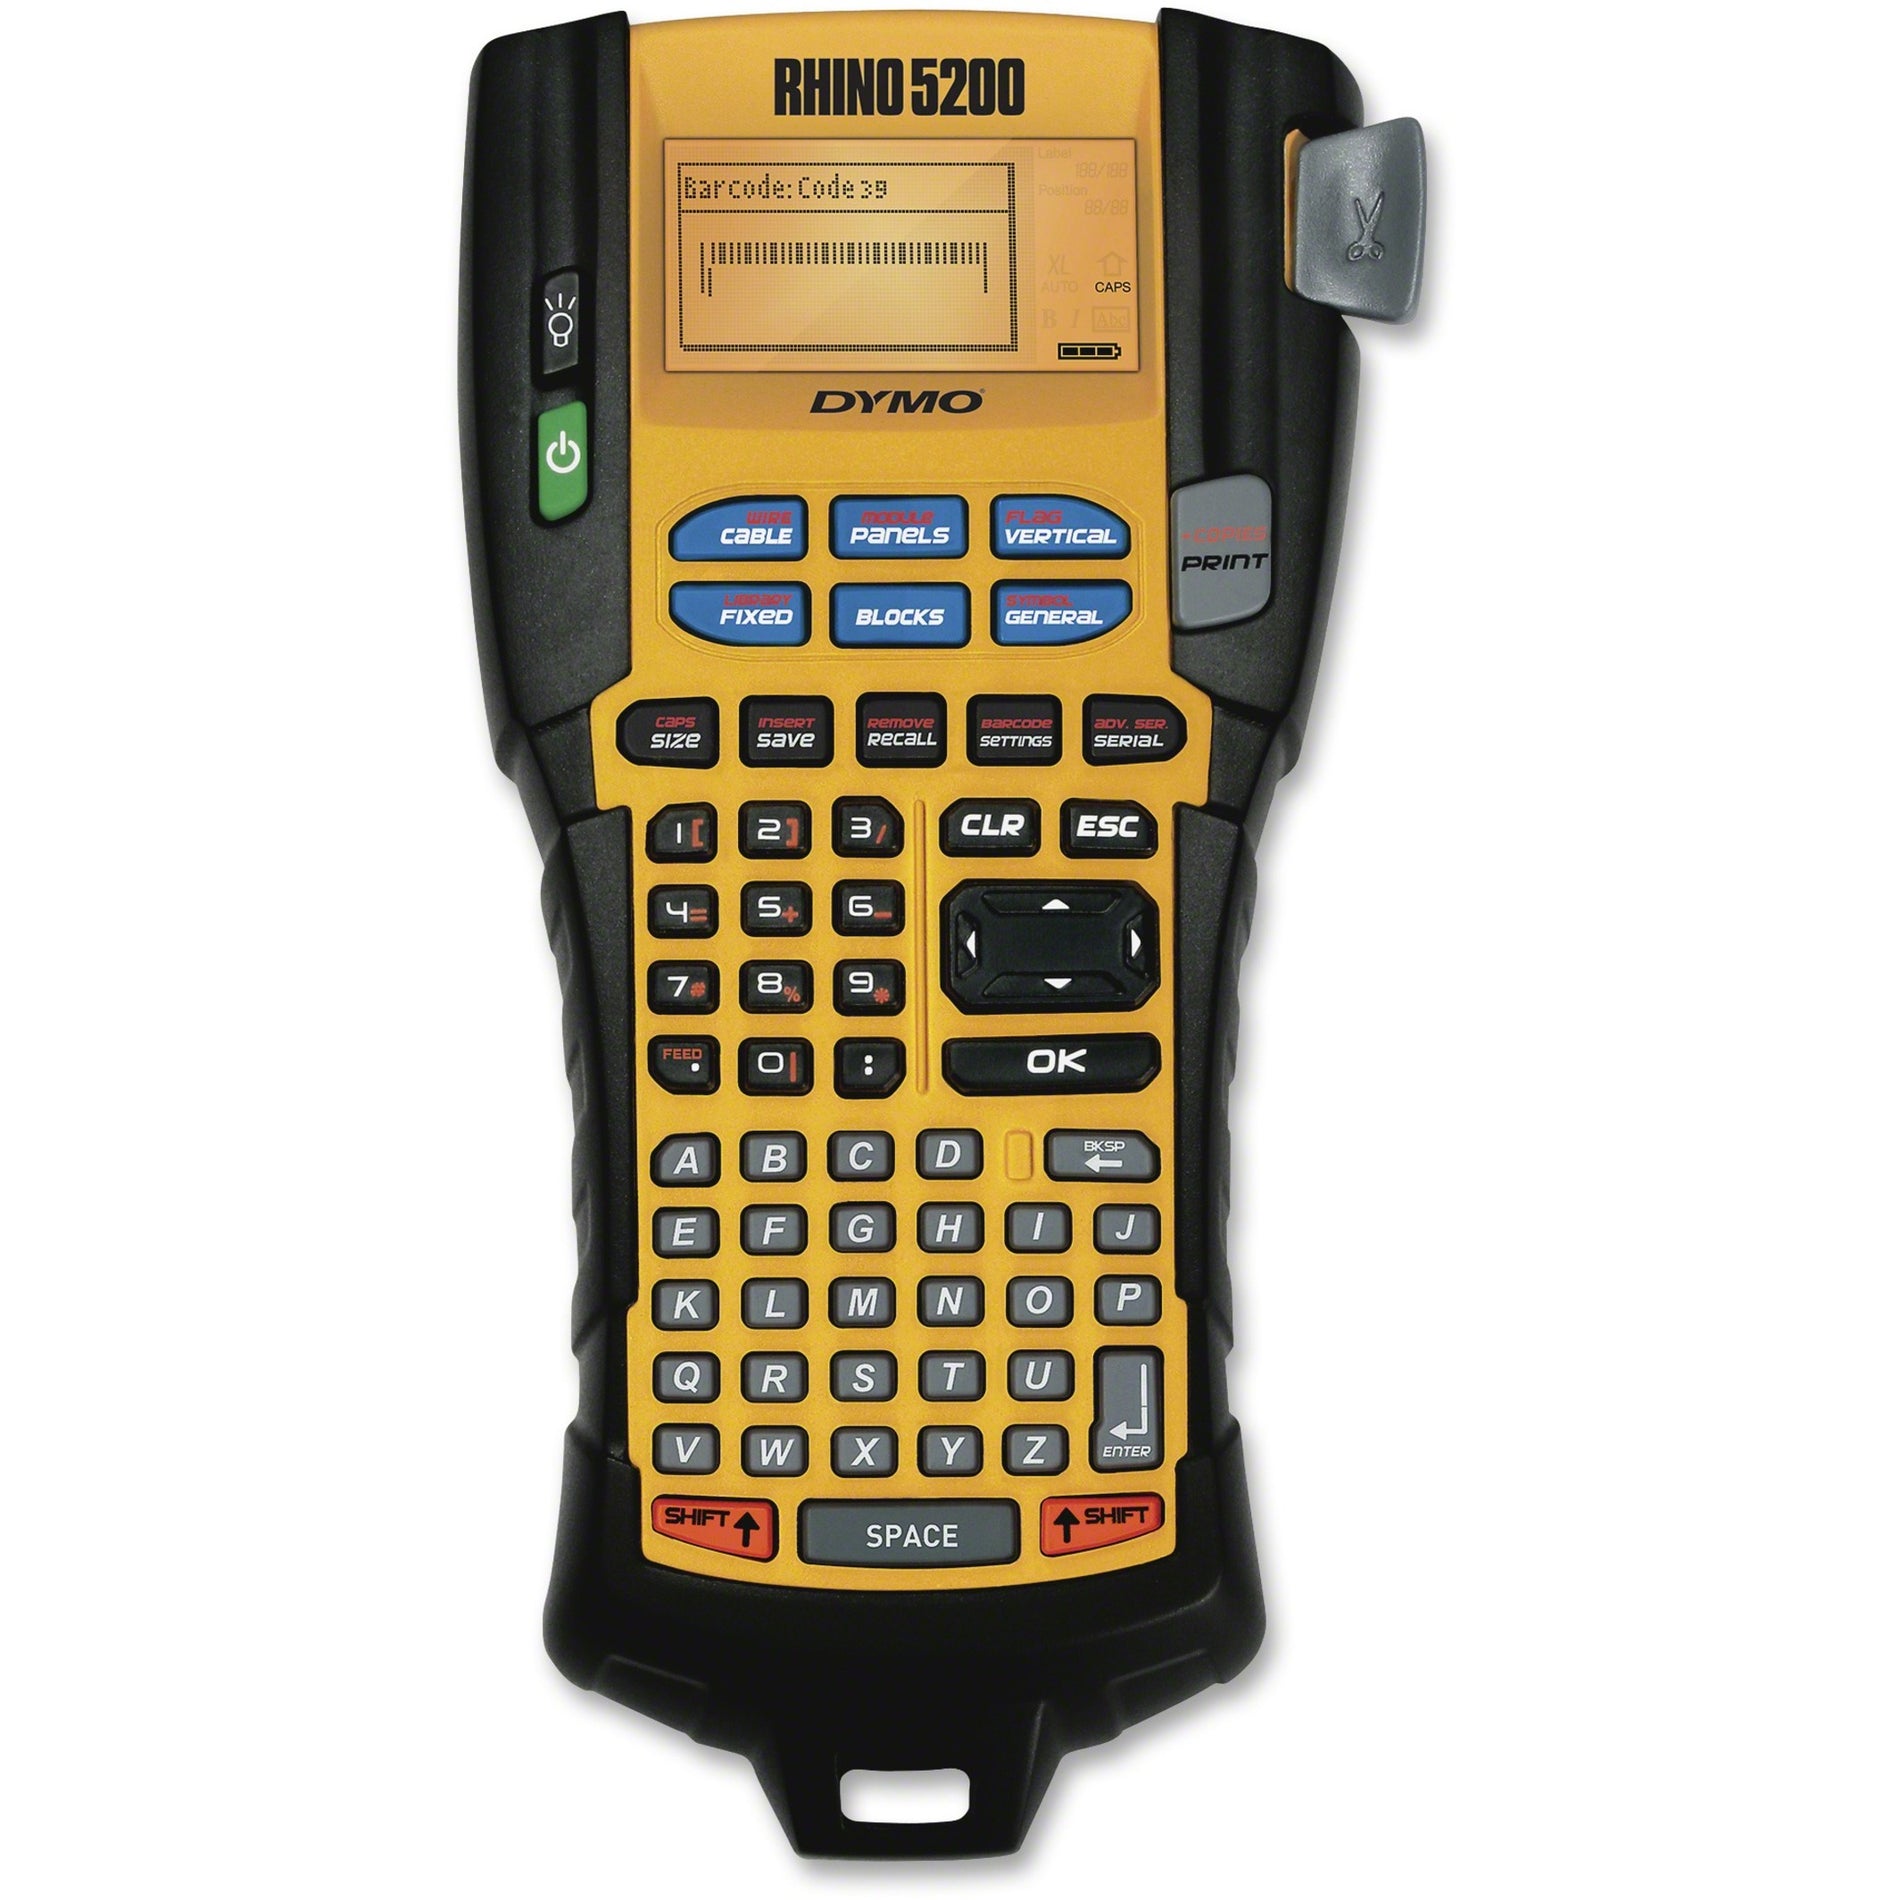 Dymo 1755749 RhinoPRO 5200 Label Maker, Industrial Electronic Label Maker